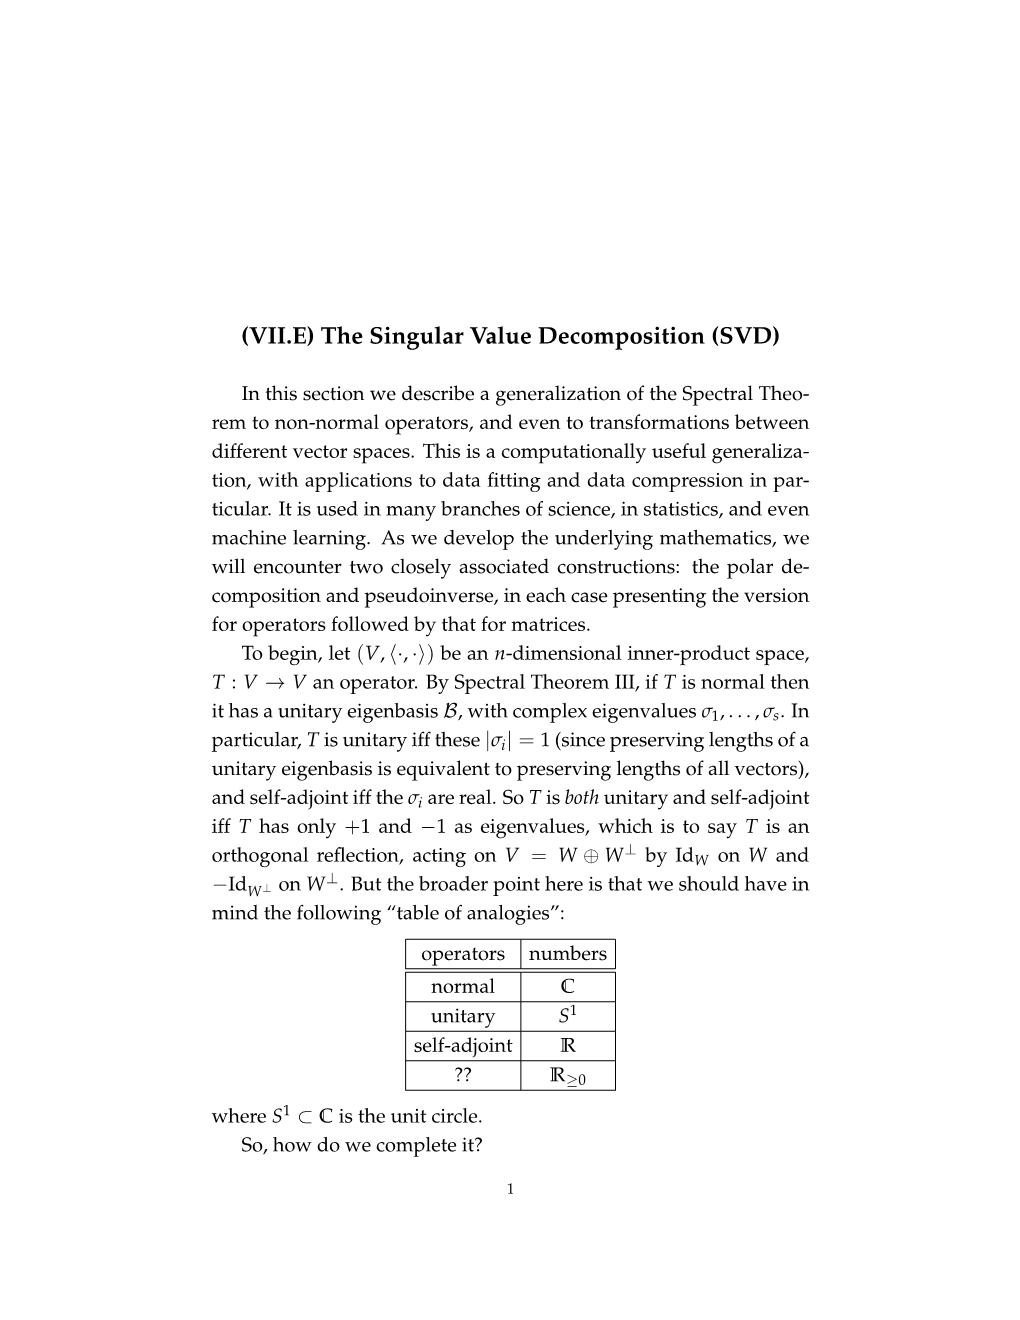 VII.E) the Singular Value Decomposition (SVD